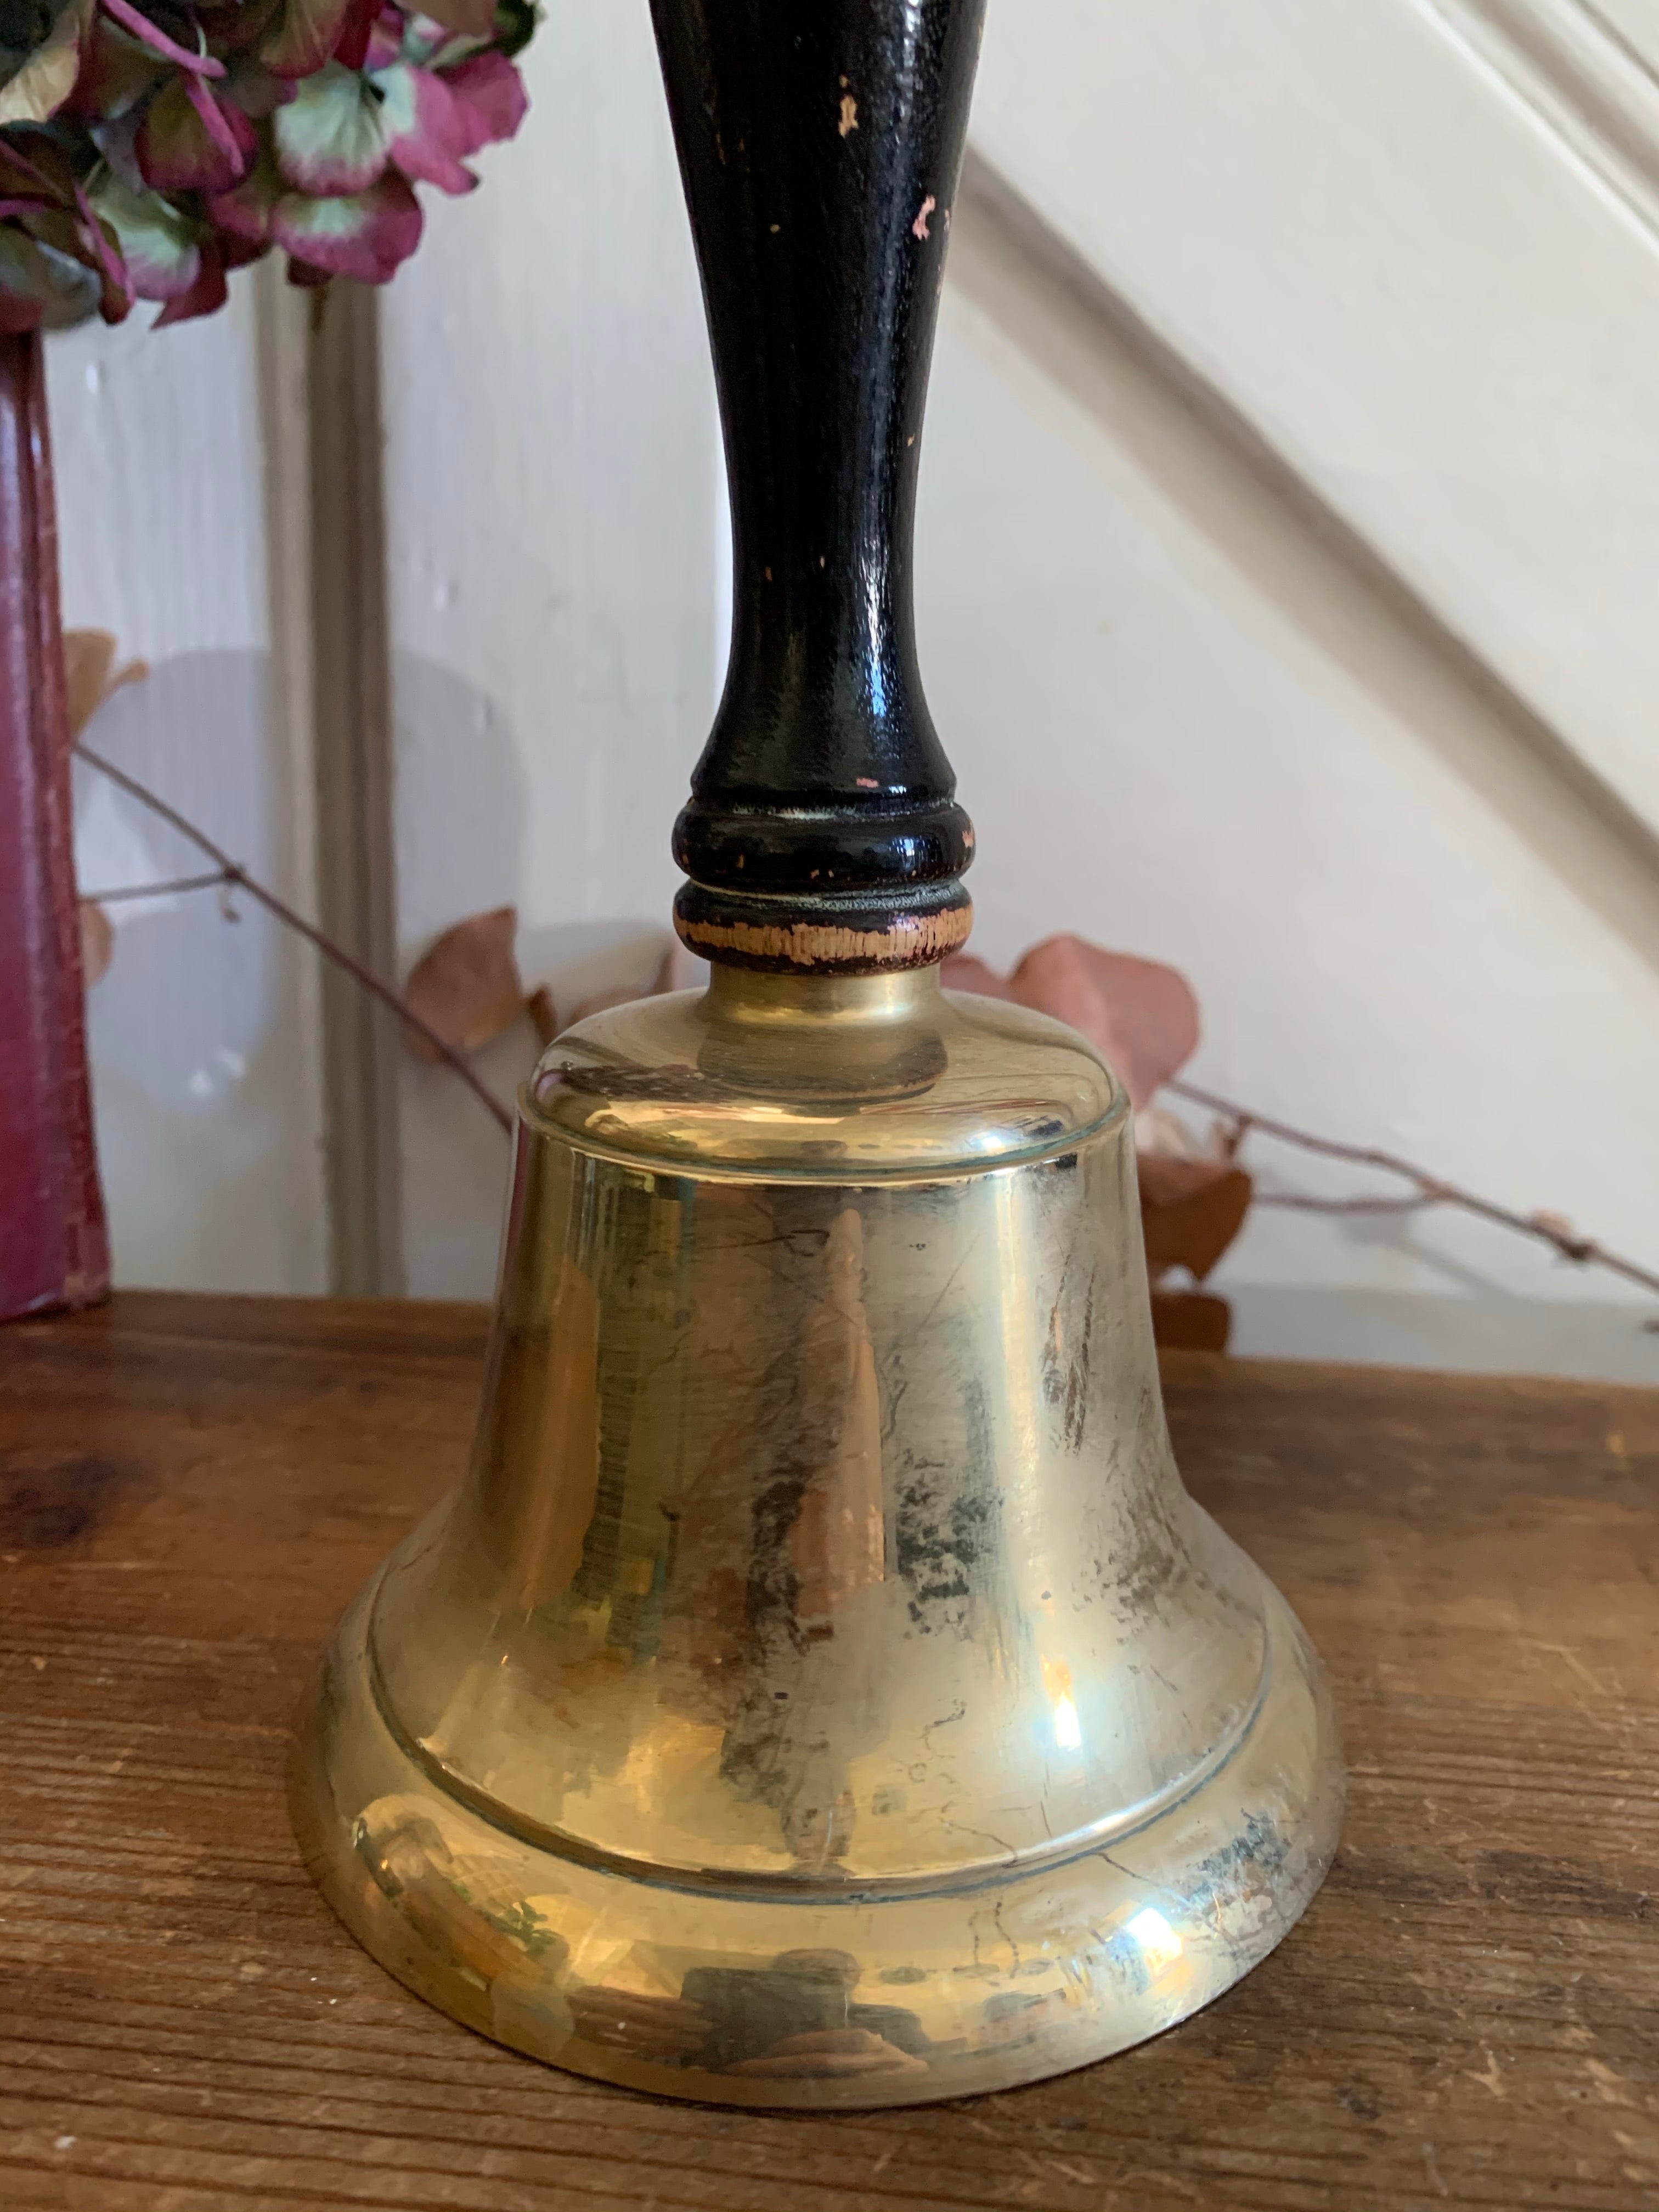 Large Vintage Brass Handbell with Black Handle